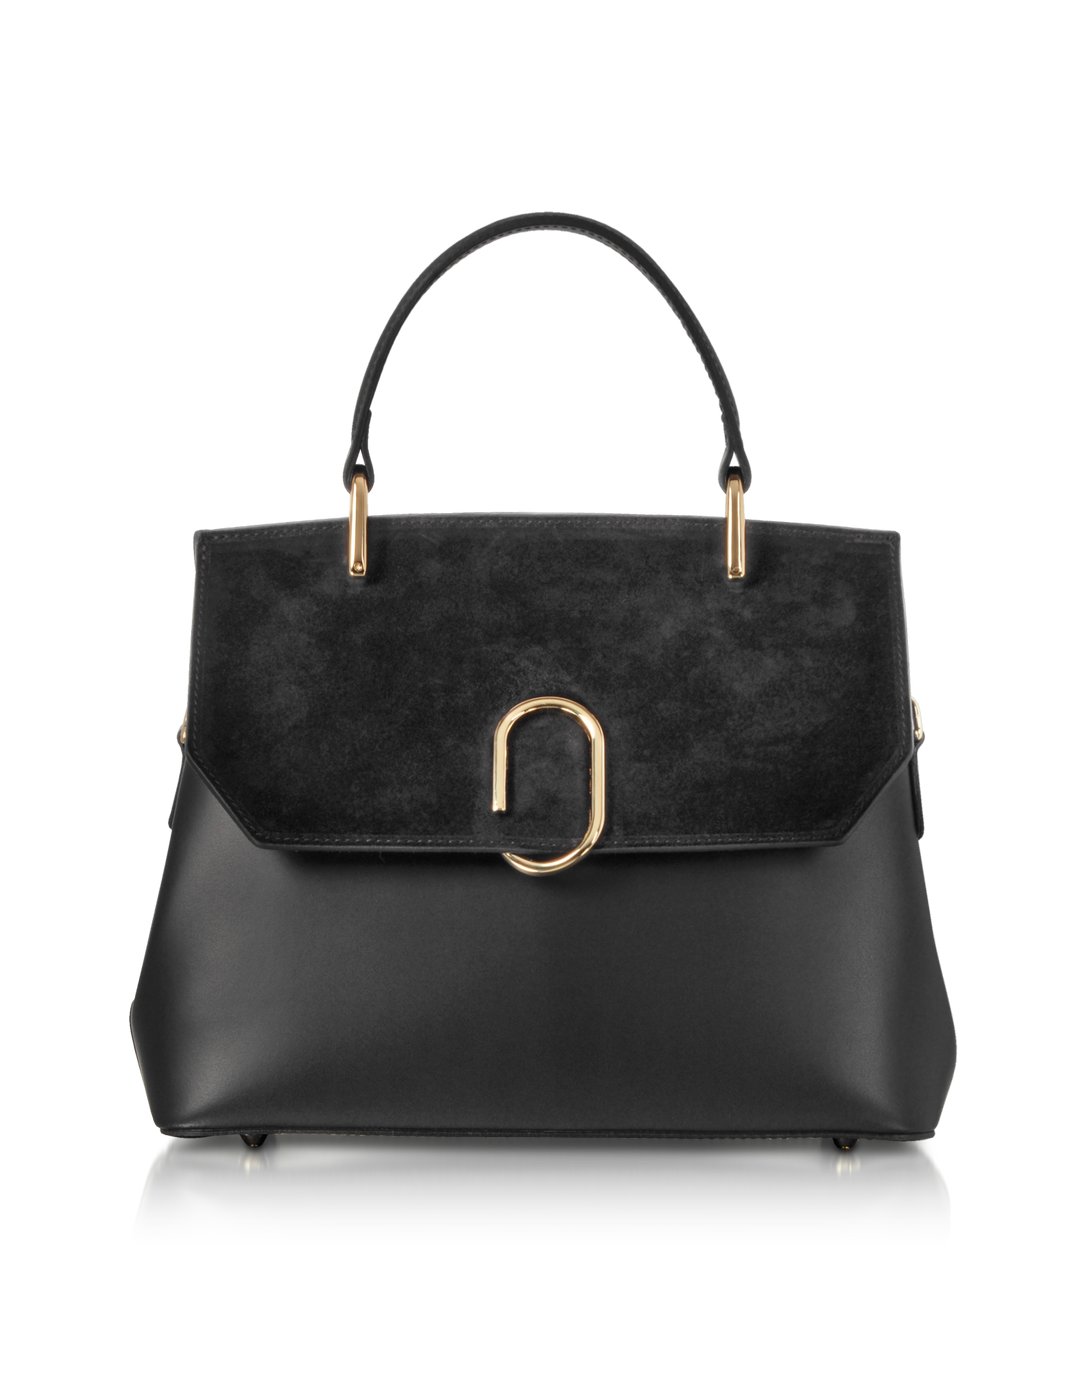 Elegant black leather handbag with gold hardware and top handle